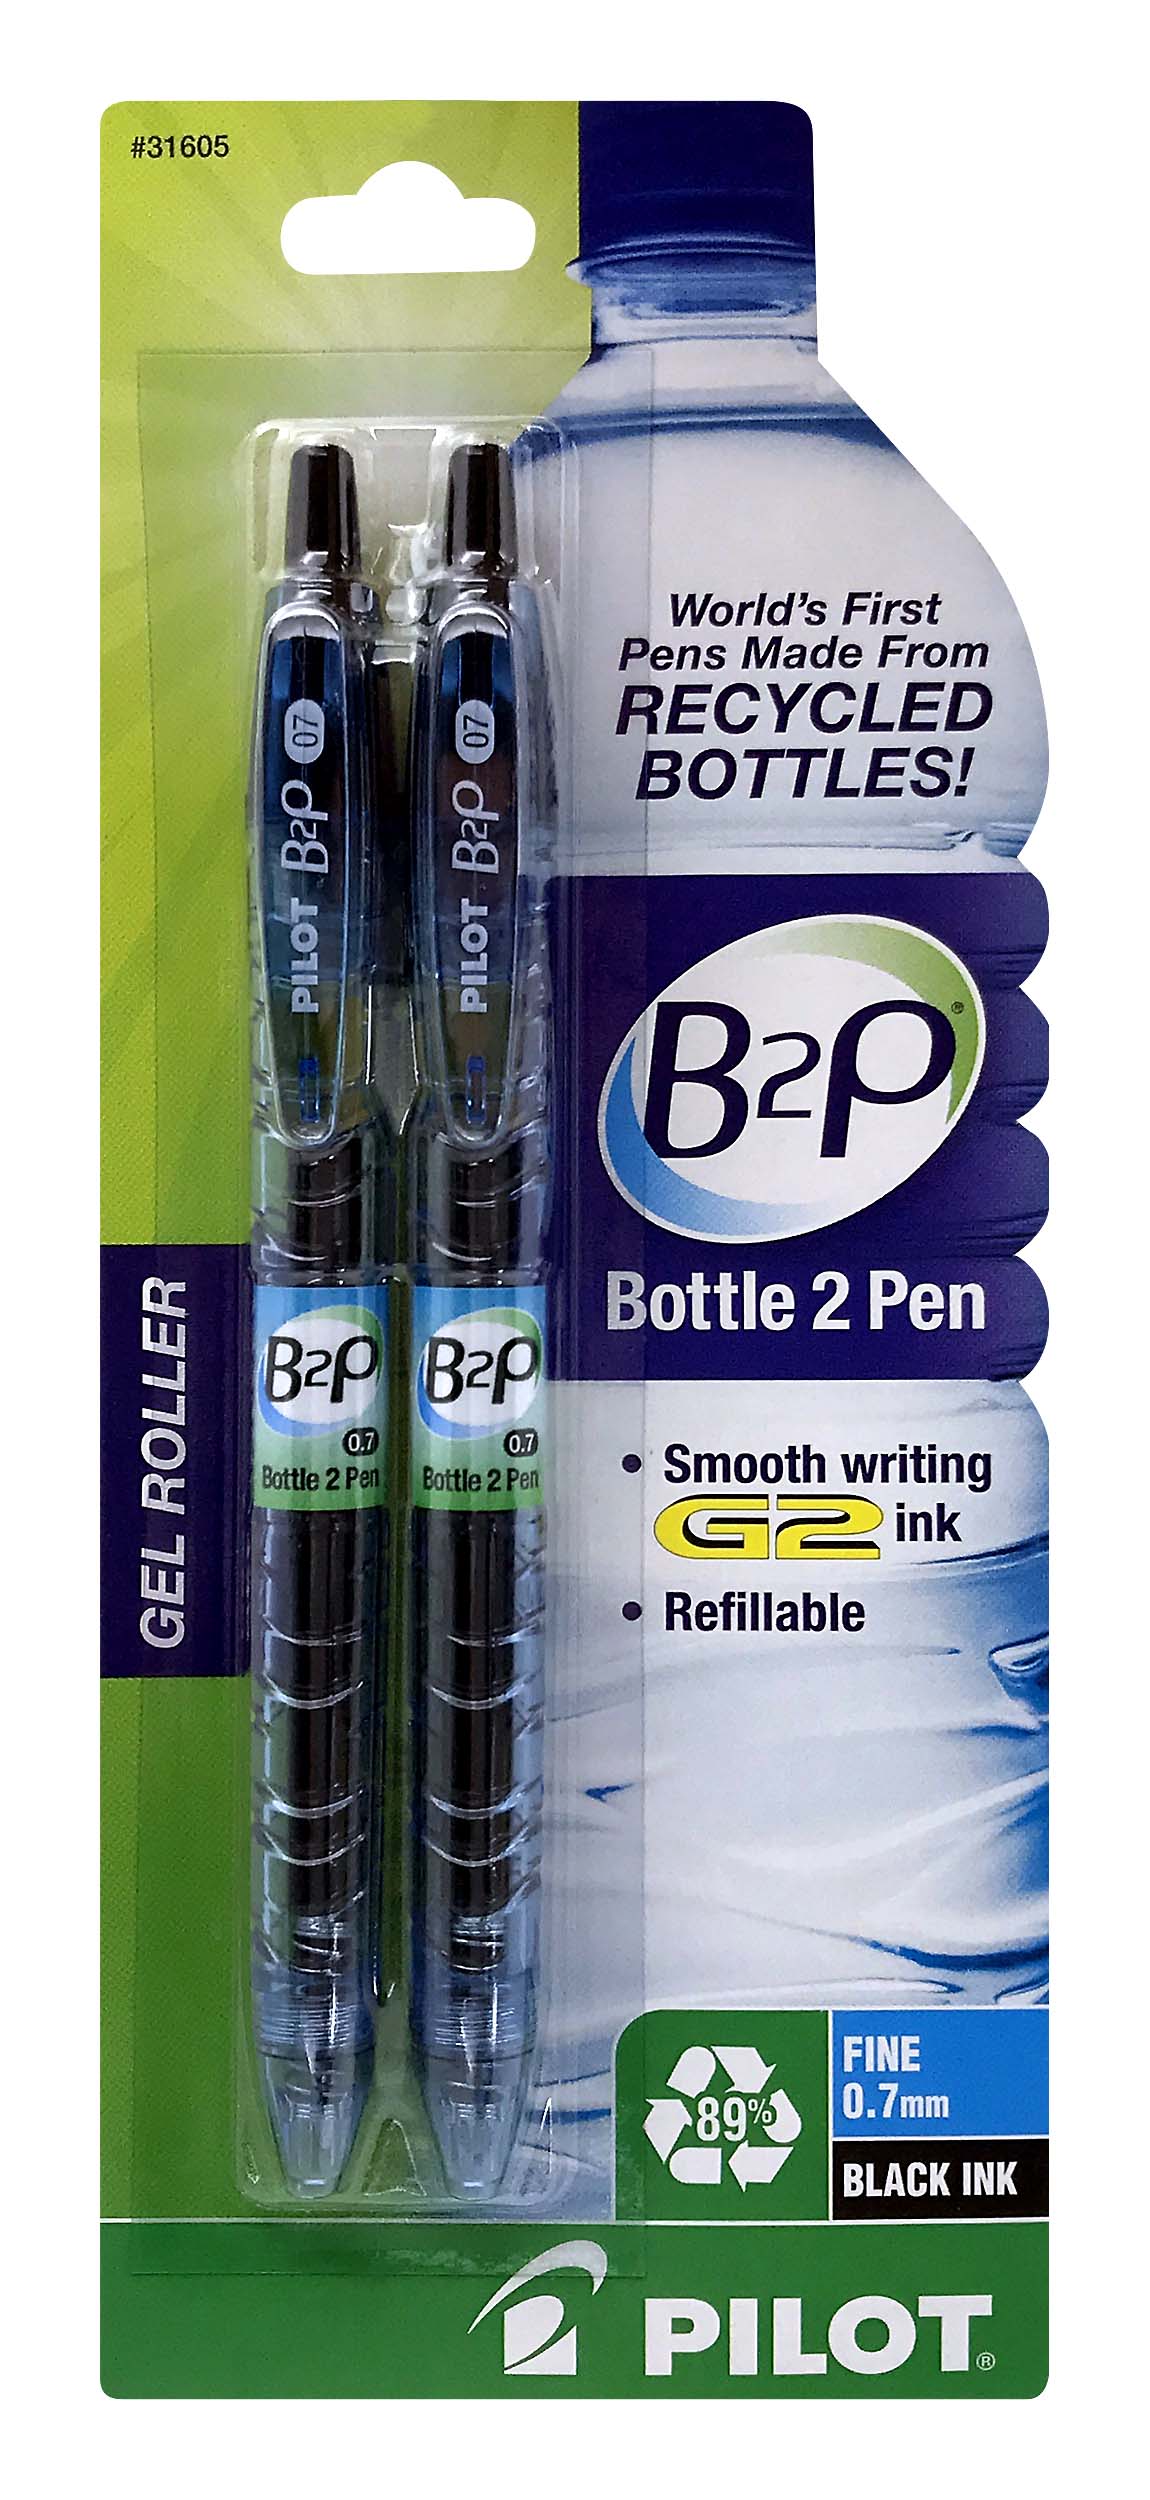 PILOT B2P Bottle 2 Pen Recycled Gel Pen, 5pk